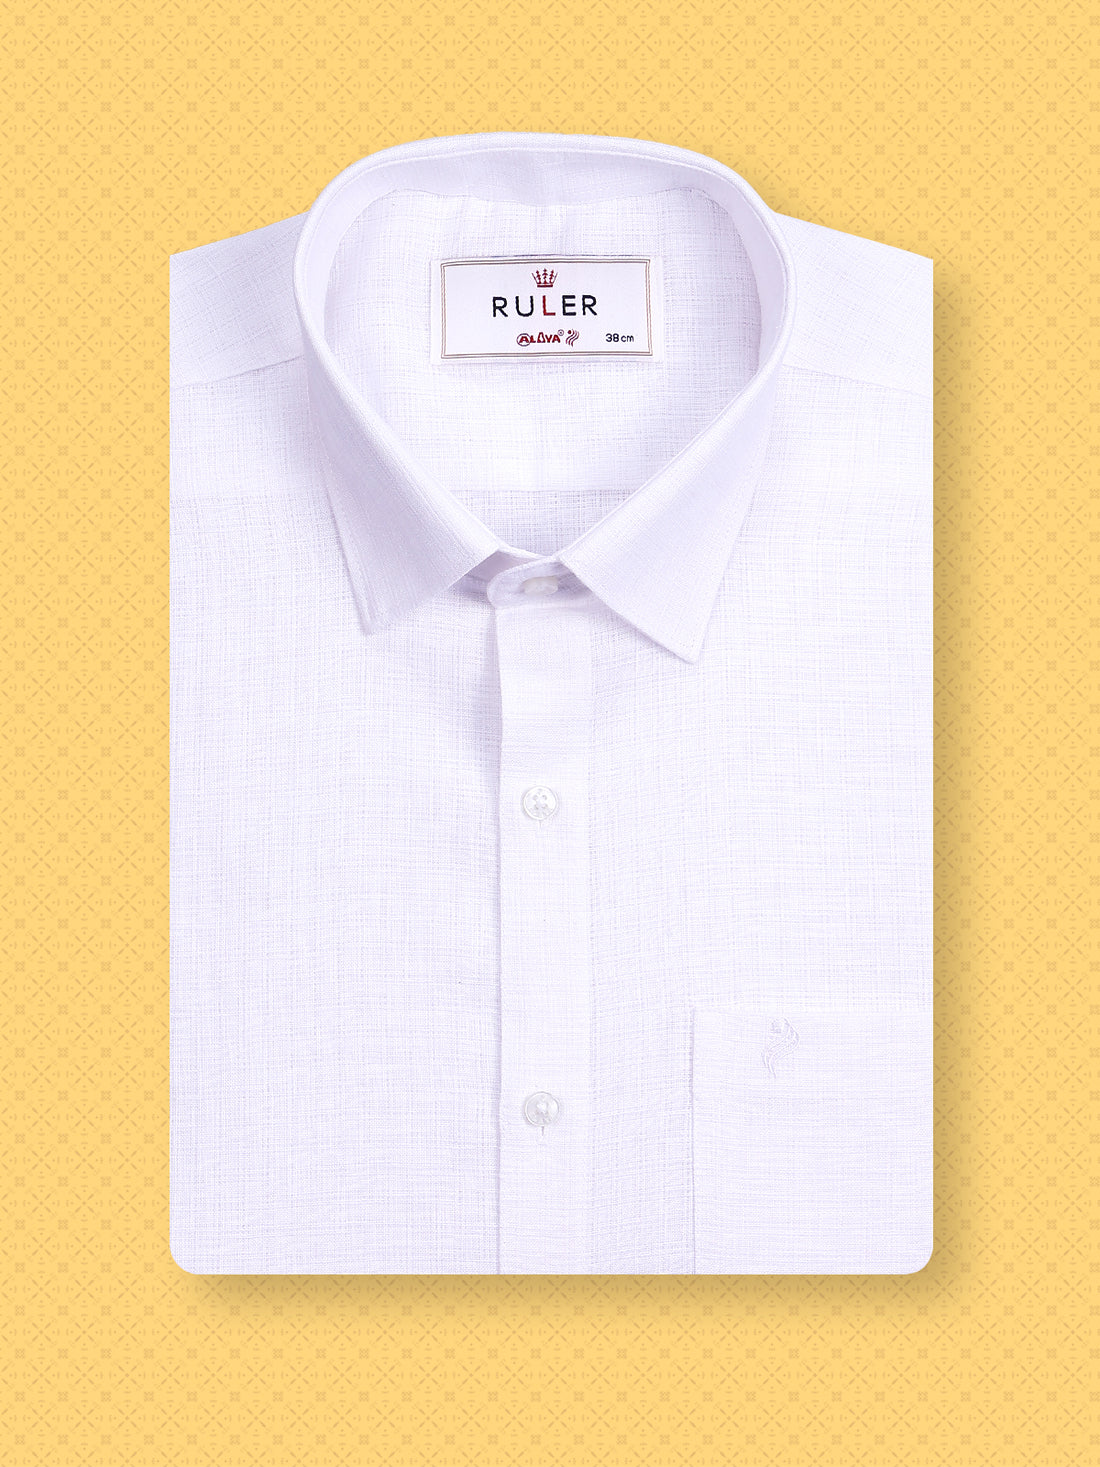 Ruler Mixed Cotton Shirt - FT8 - Regular Fit